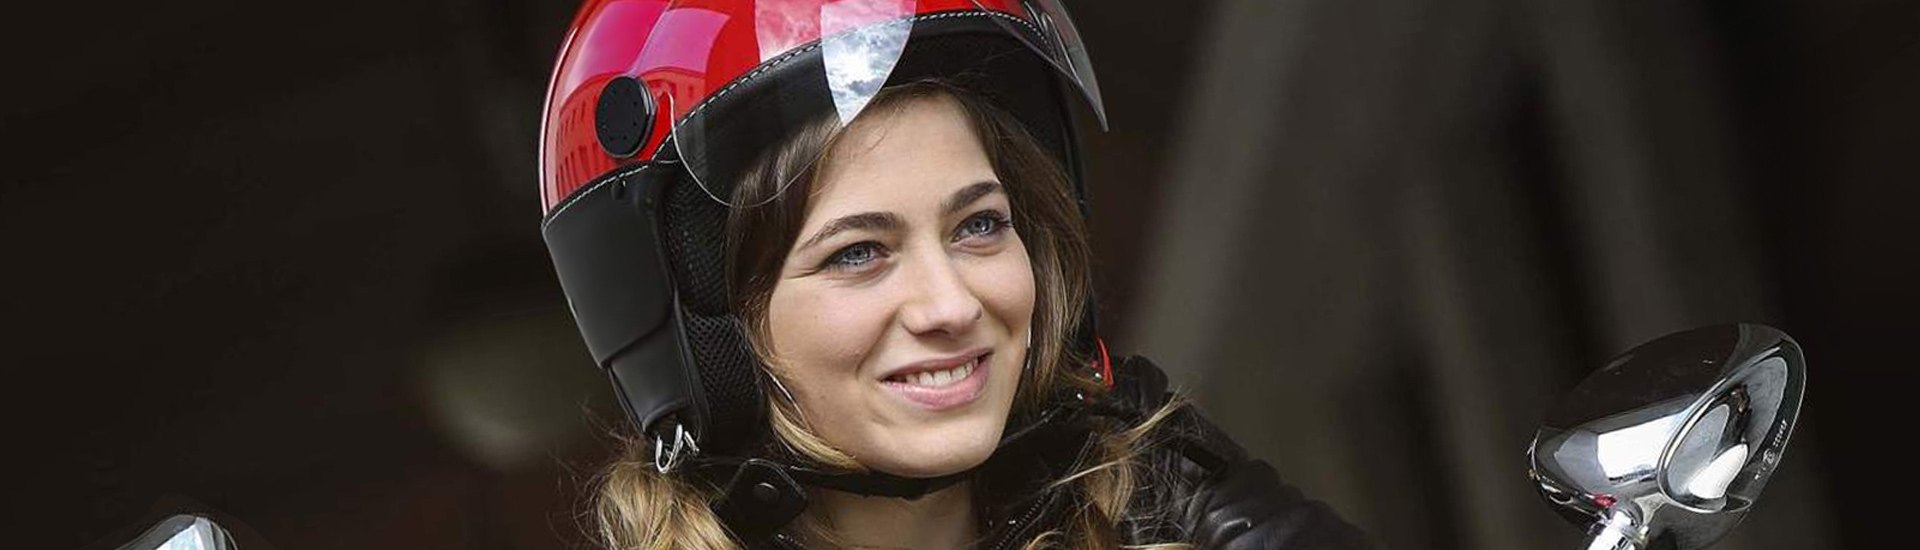 Motorcycle Women's Helmets